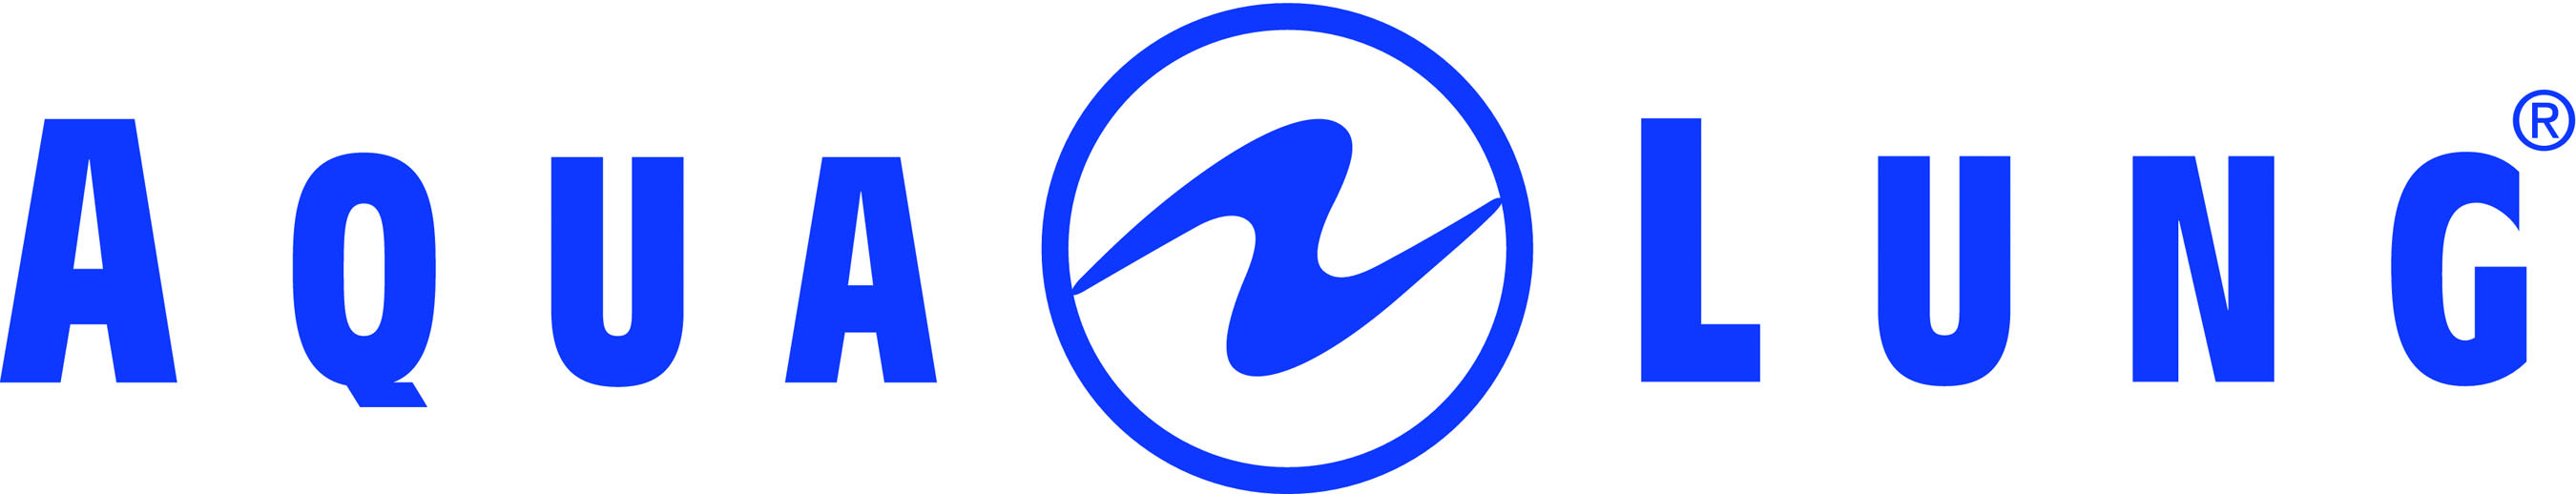 Aqua Lung Logo